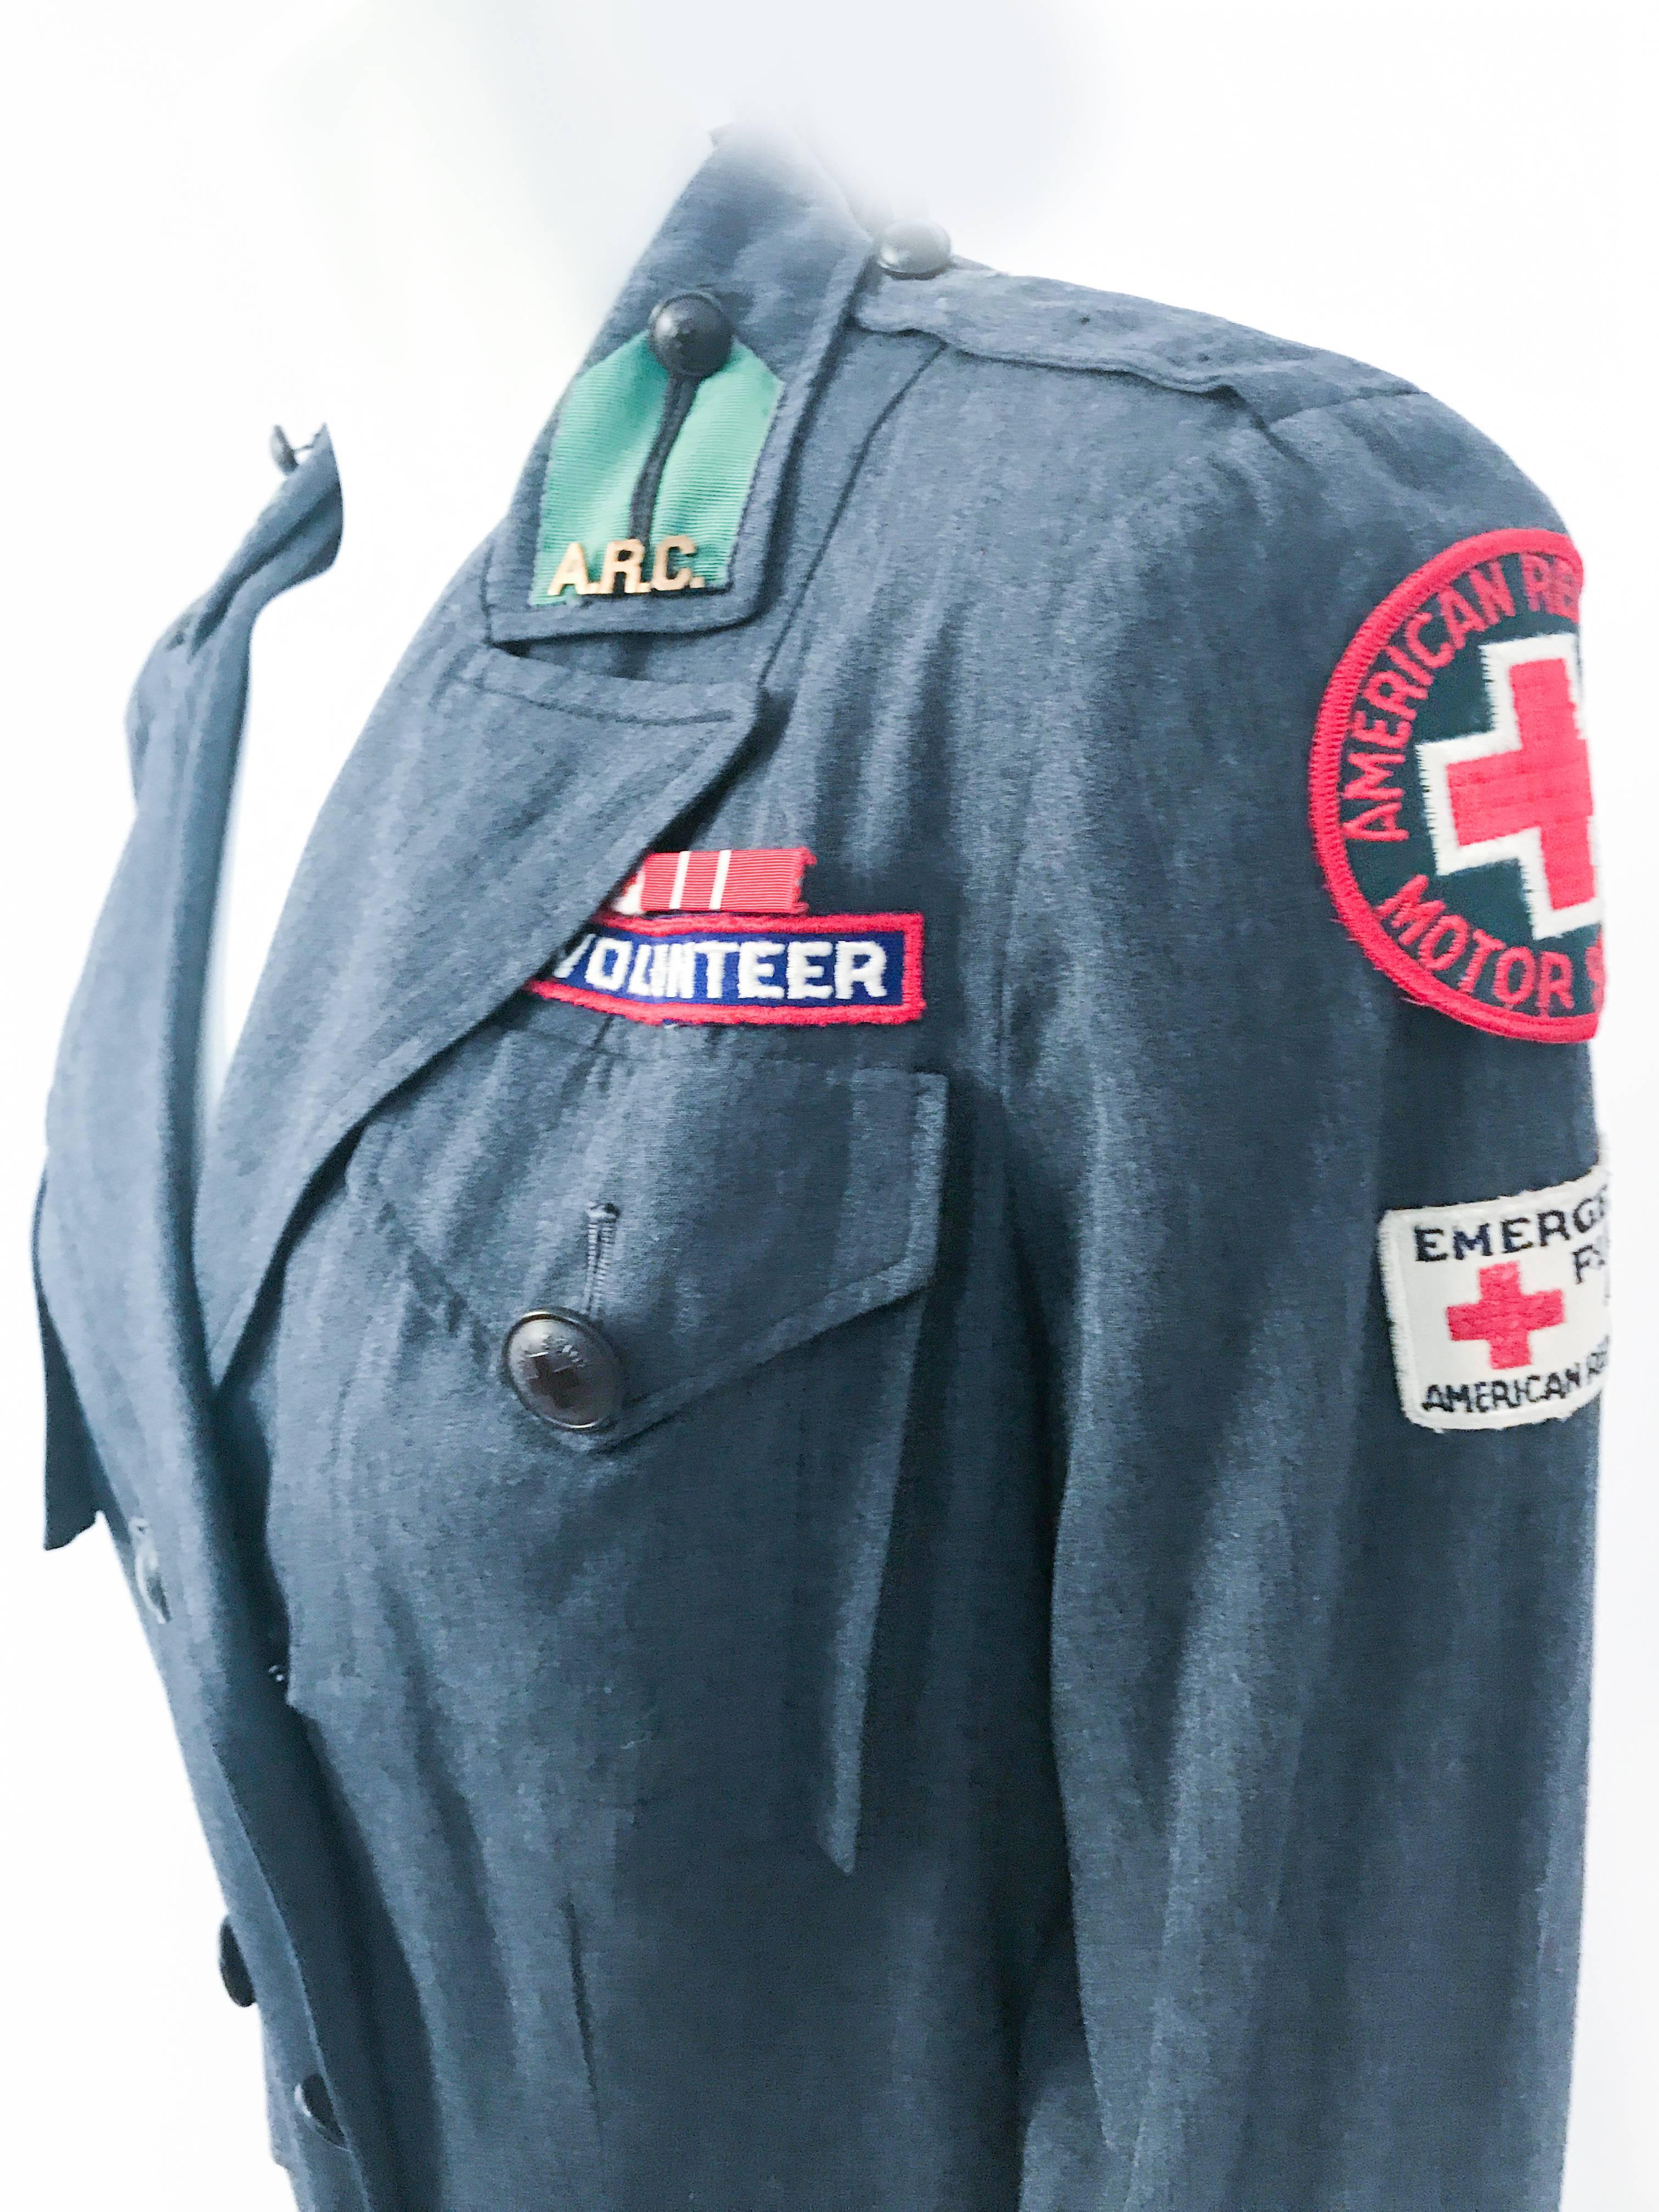 american red cross uniform ww2